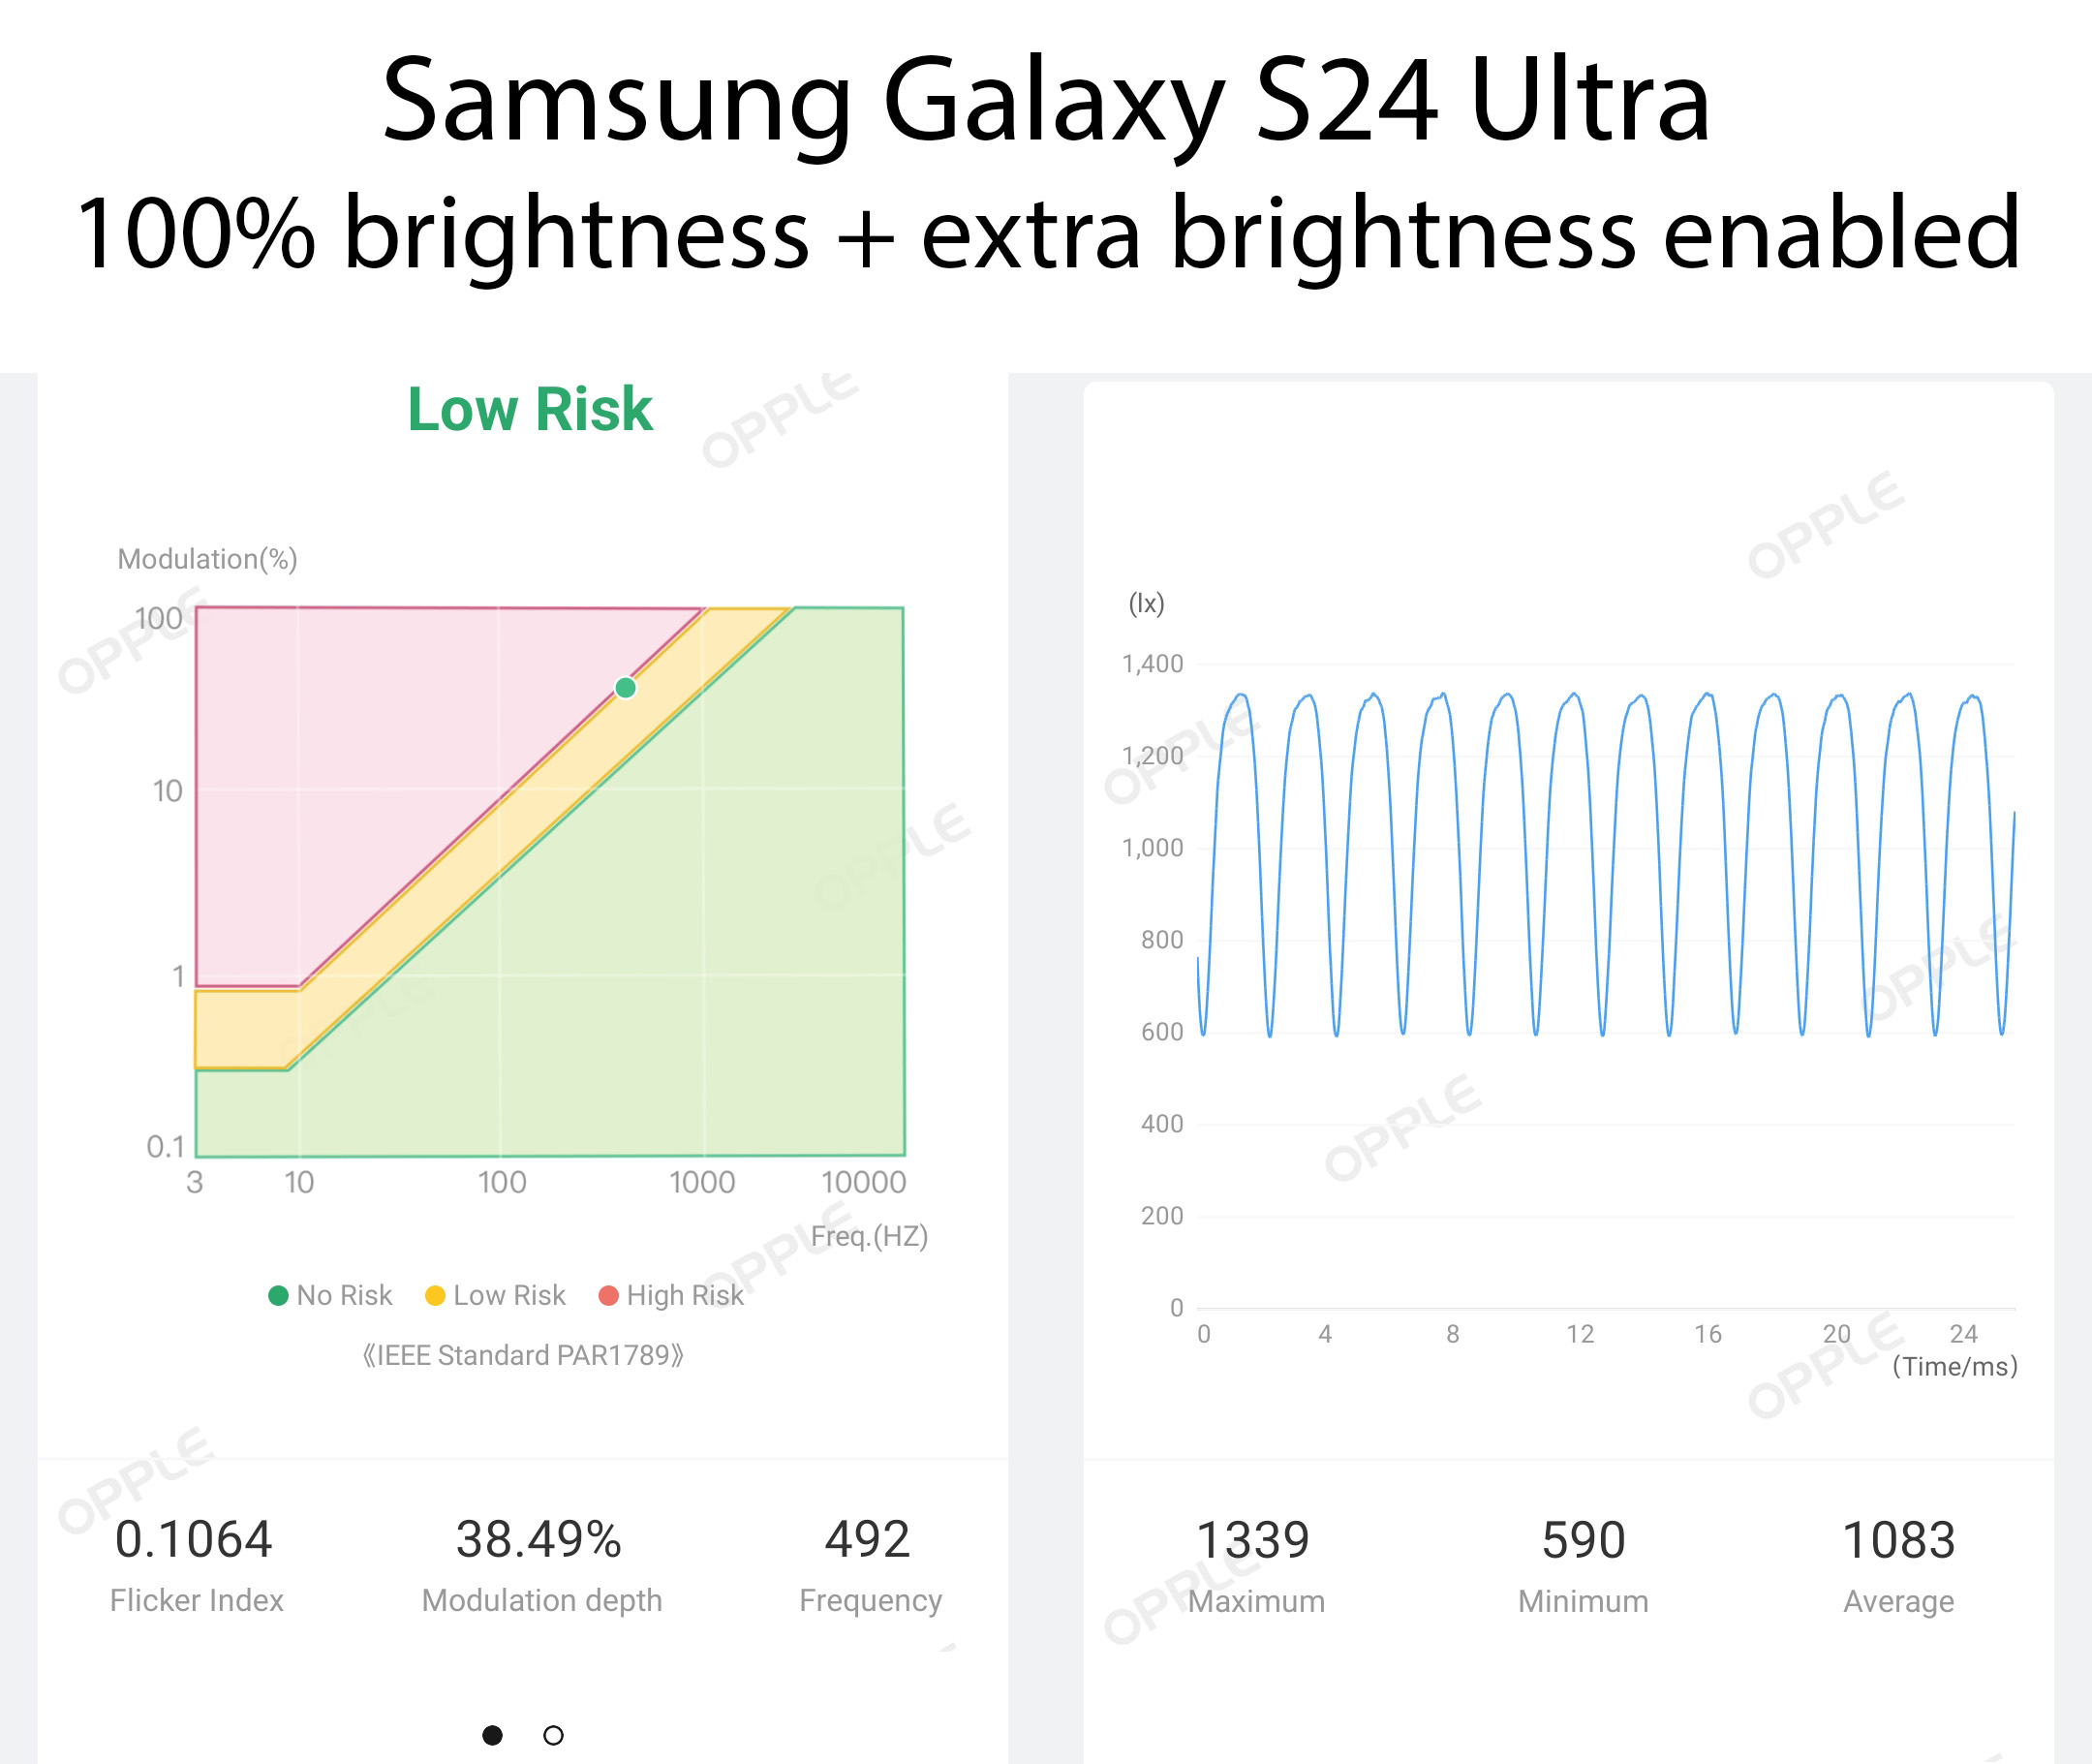 The PWM measurement of the Samsung Galaxy S24 Ultra at maximum brightness